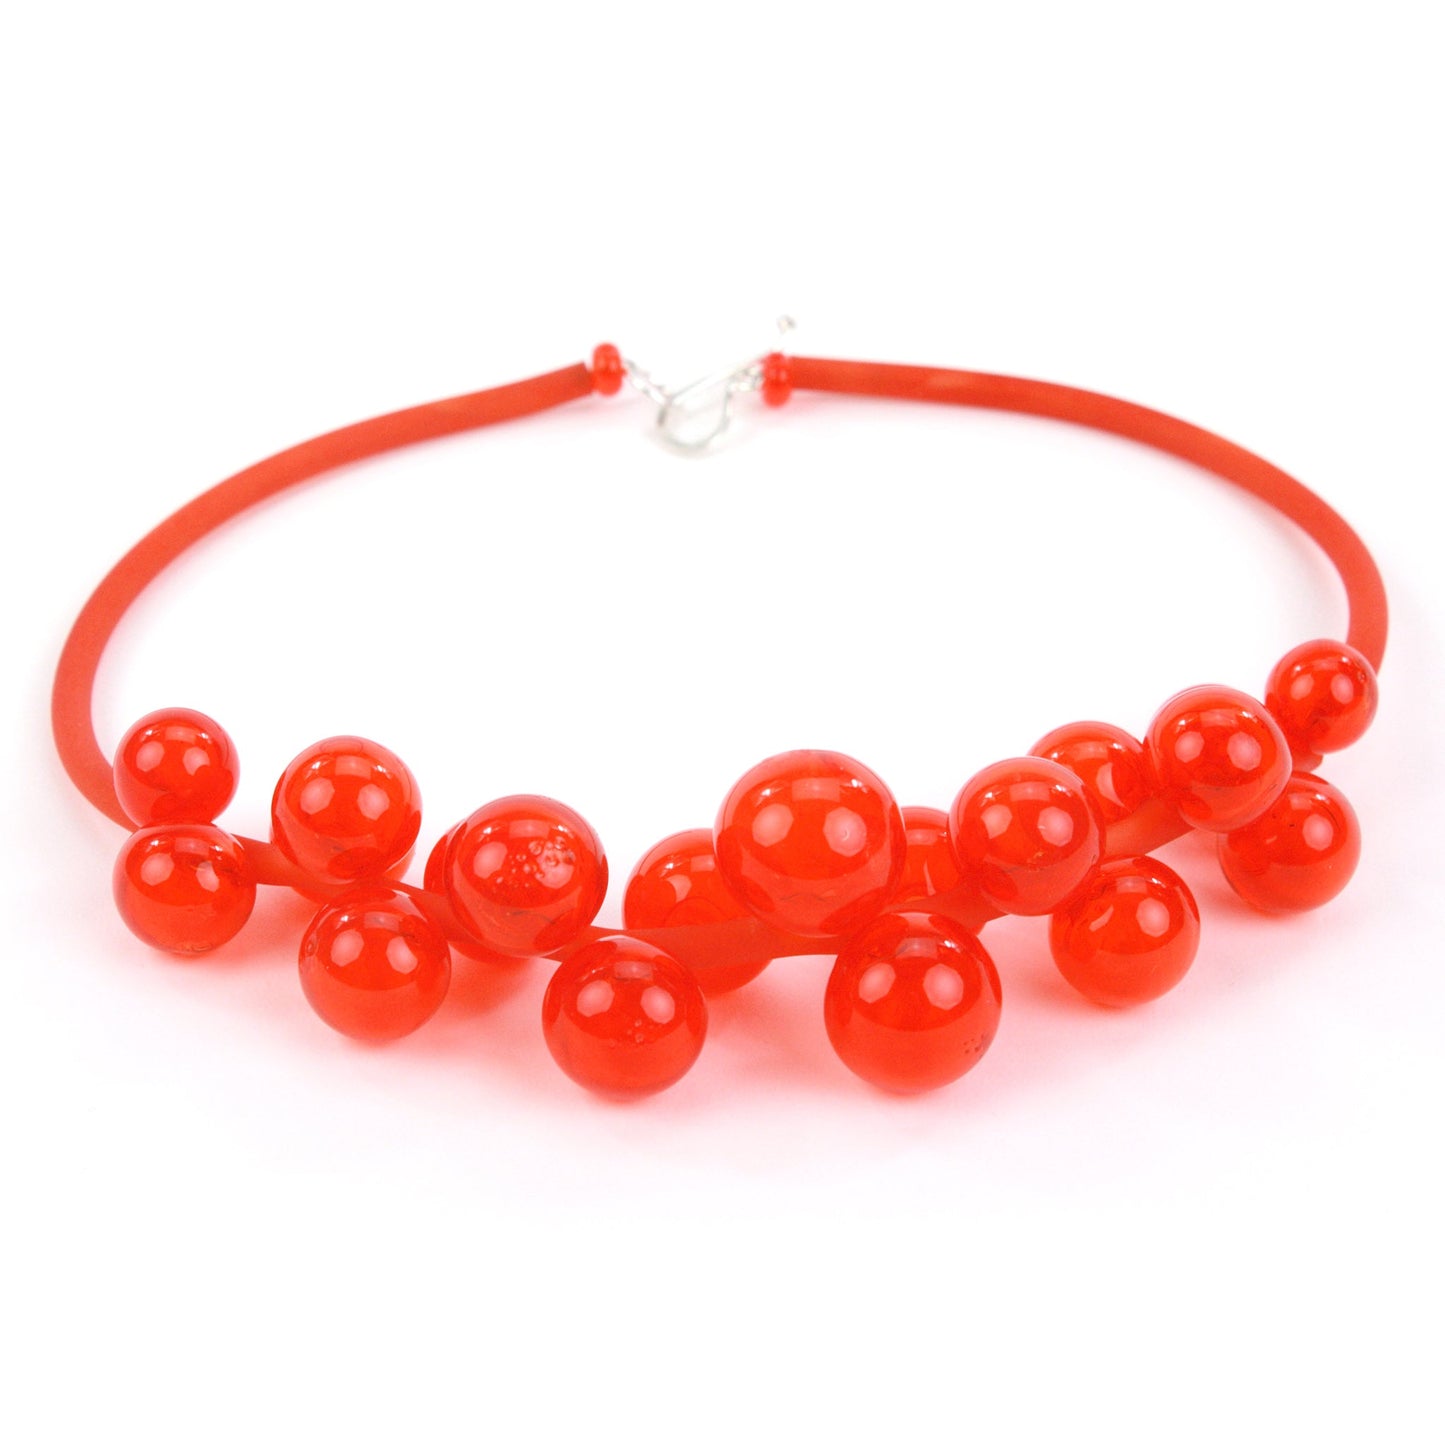 Chroma Bolla Necklace in Orange Red